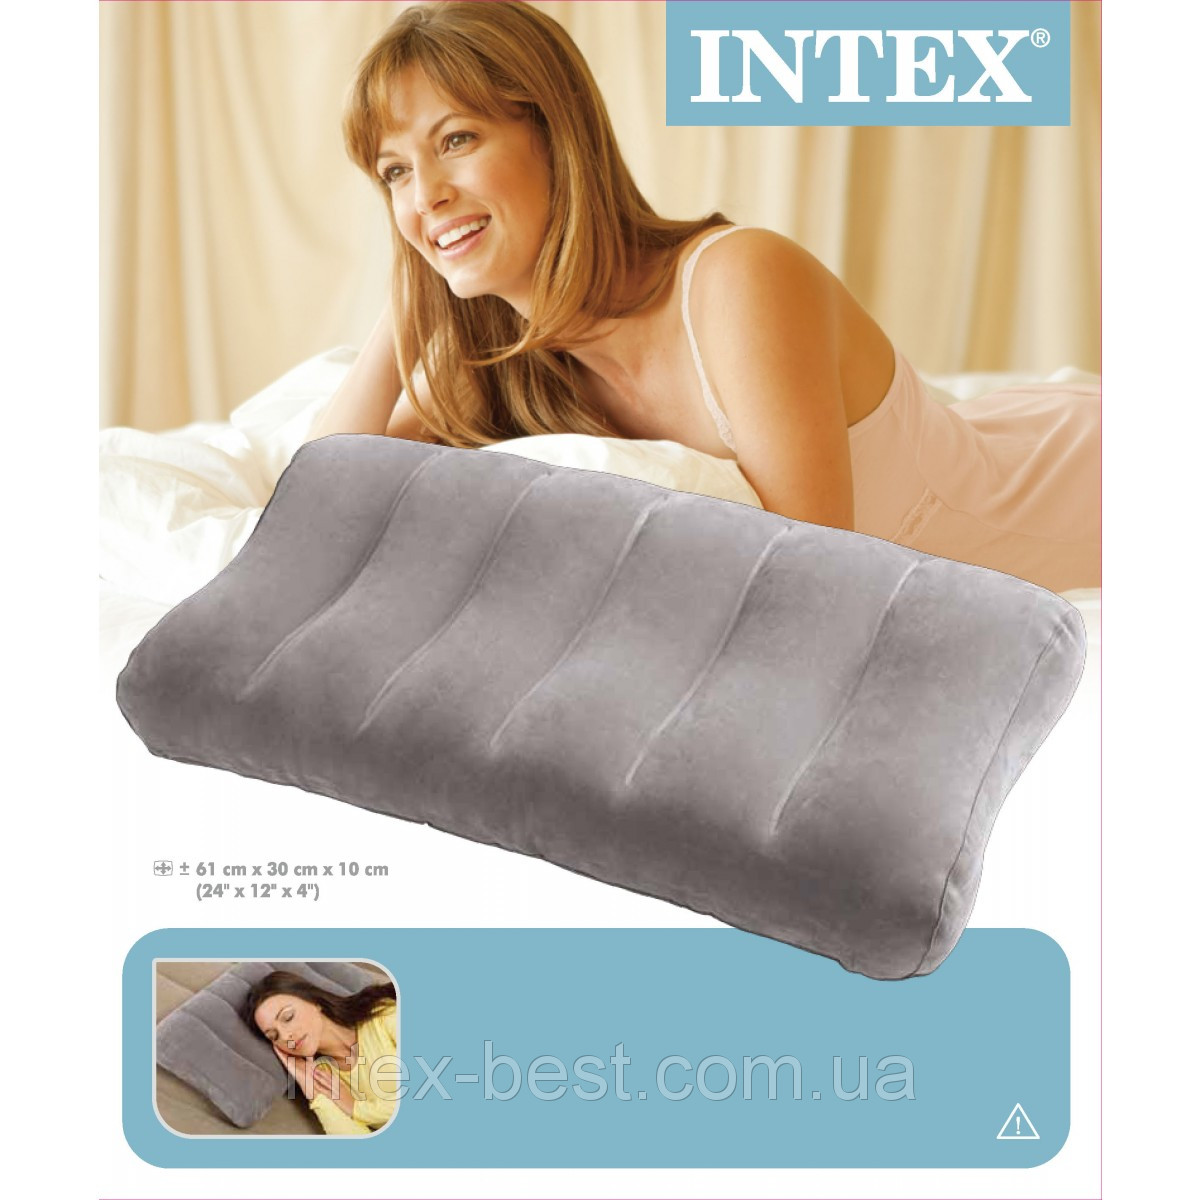 Intex 68677,  подушка | Intex-Best